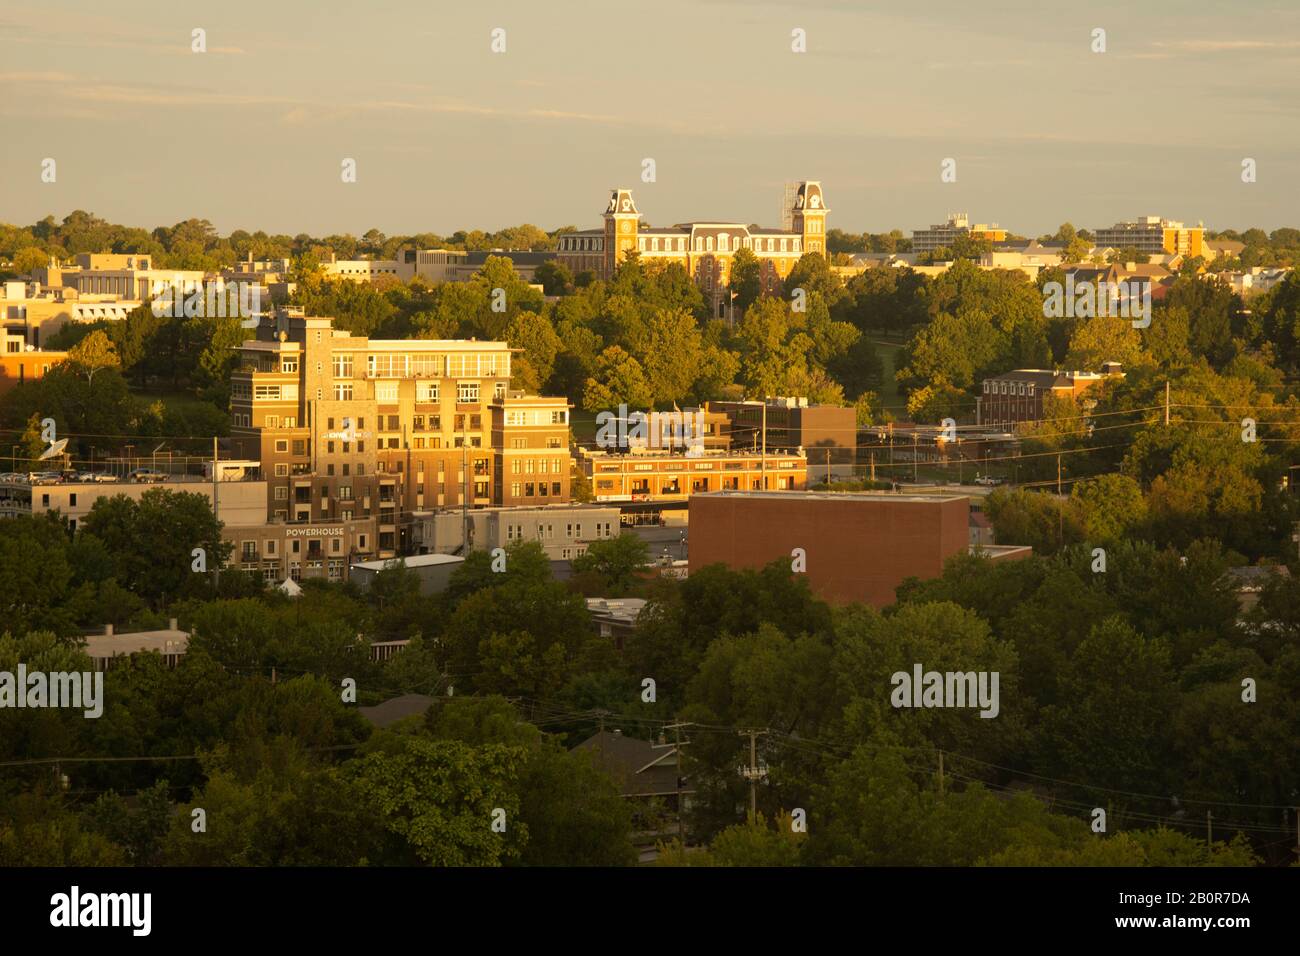 East carolina university hi-res stock photography and images - Alamy